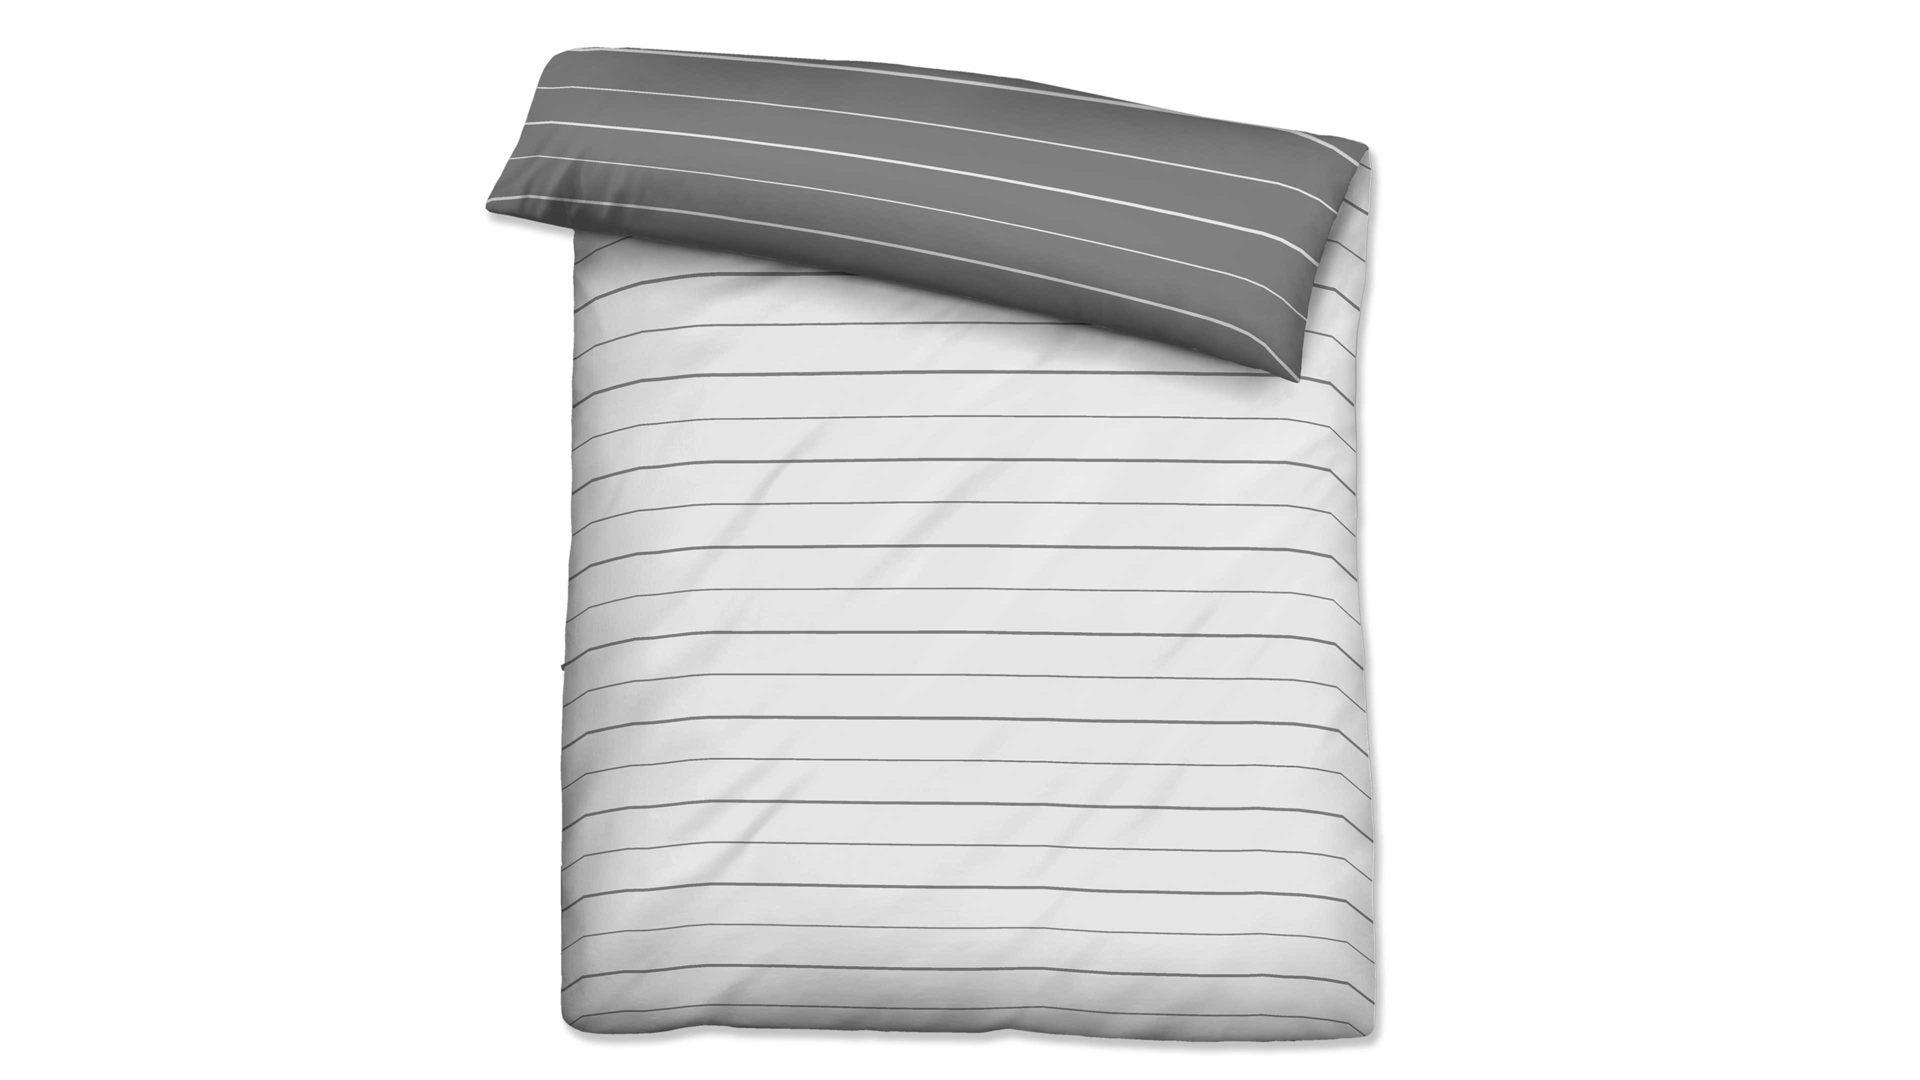 Bettbezug Biberna aus Stoff in Grau biberna Mako-Satin Bettdeckenbezug Streifen Mix & Match sturm- und hellgraue Streifen – ca. 200 x 200 cm